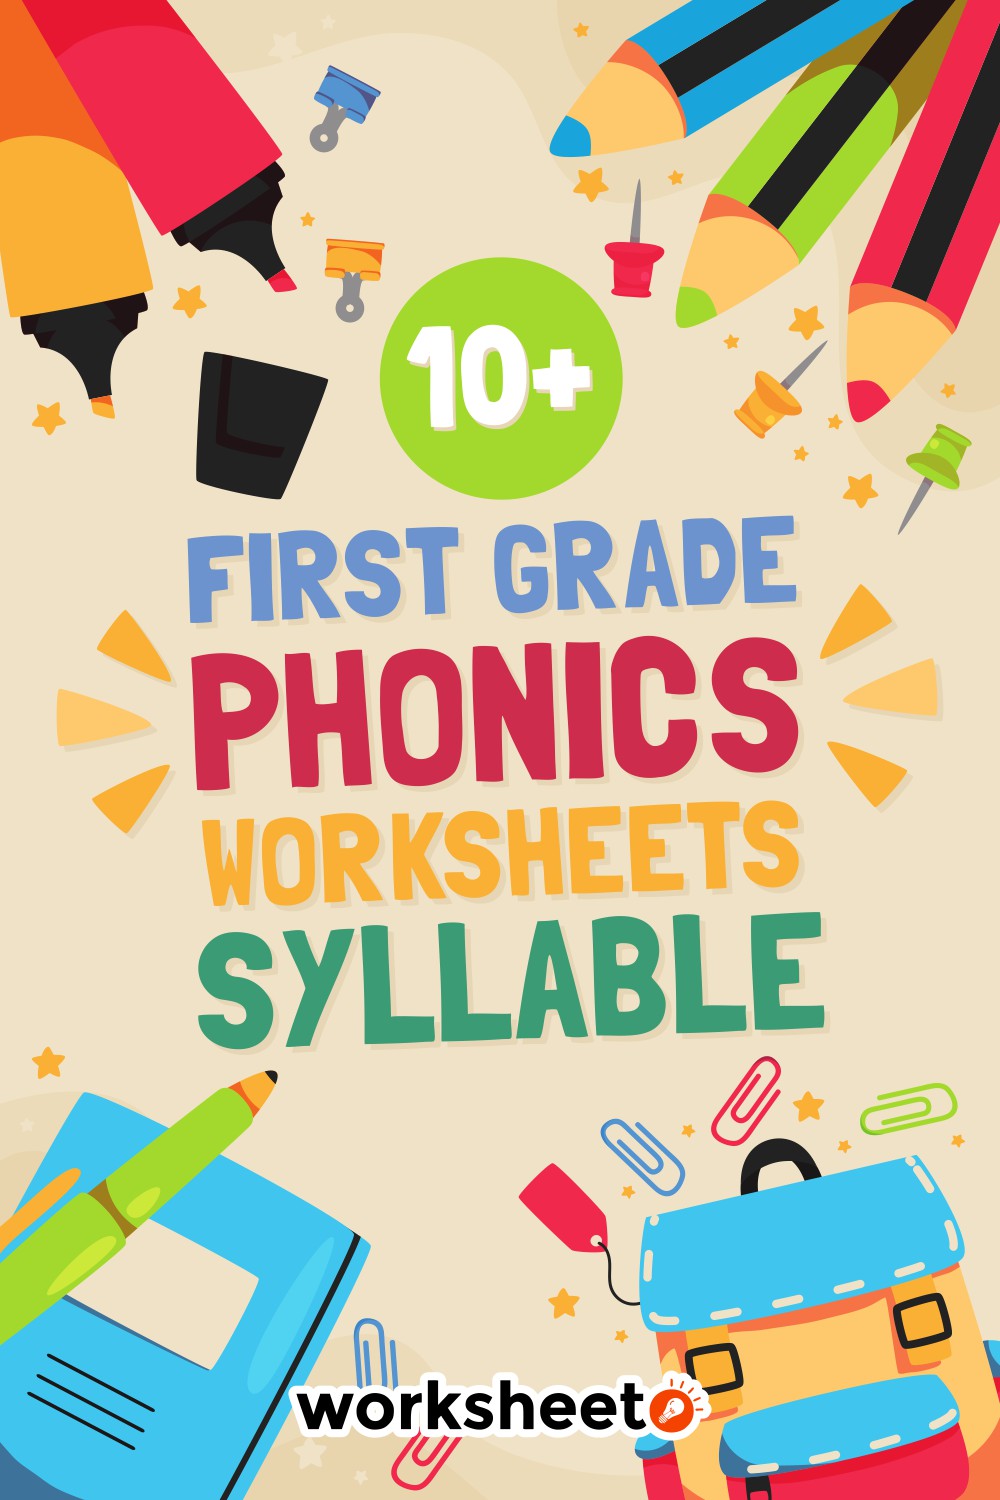 First Grade Phonics Worksheets Syllable